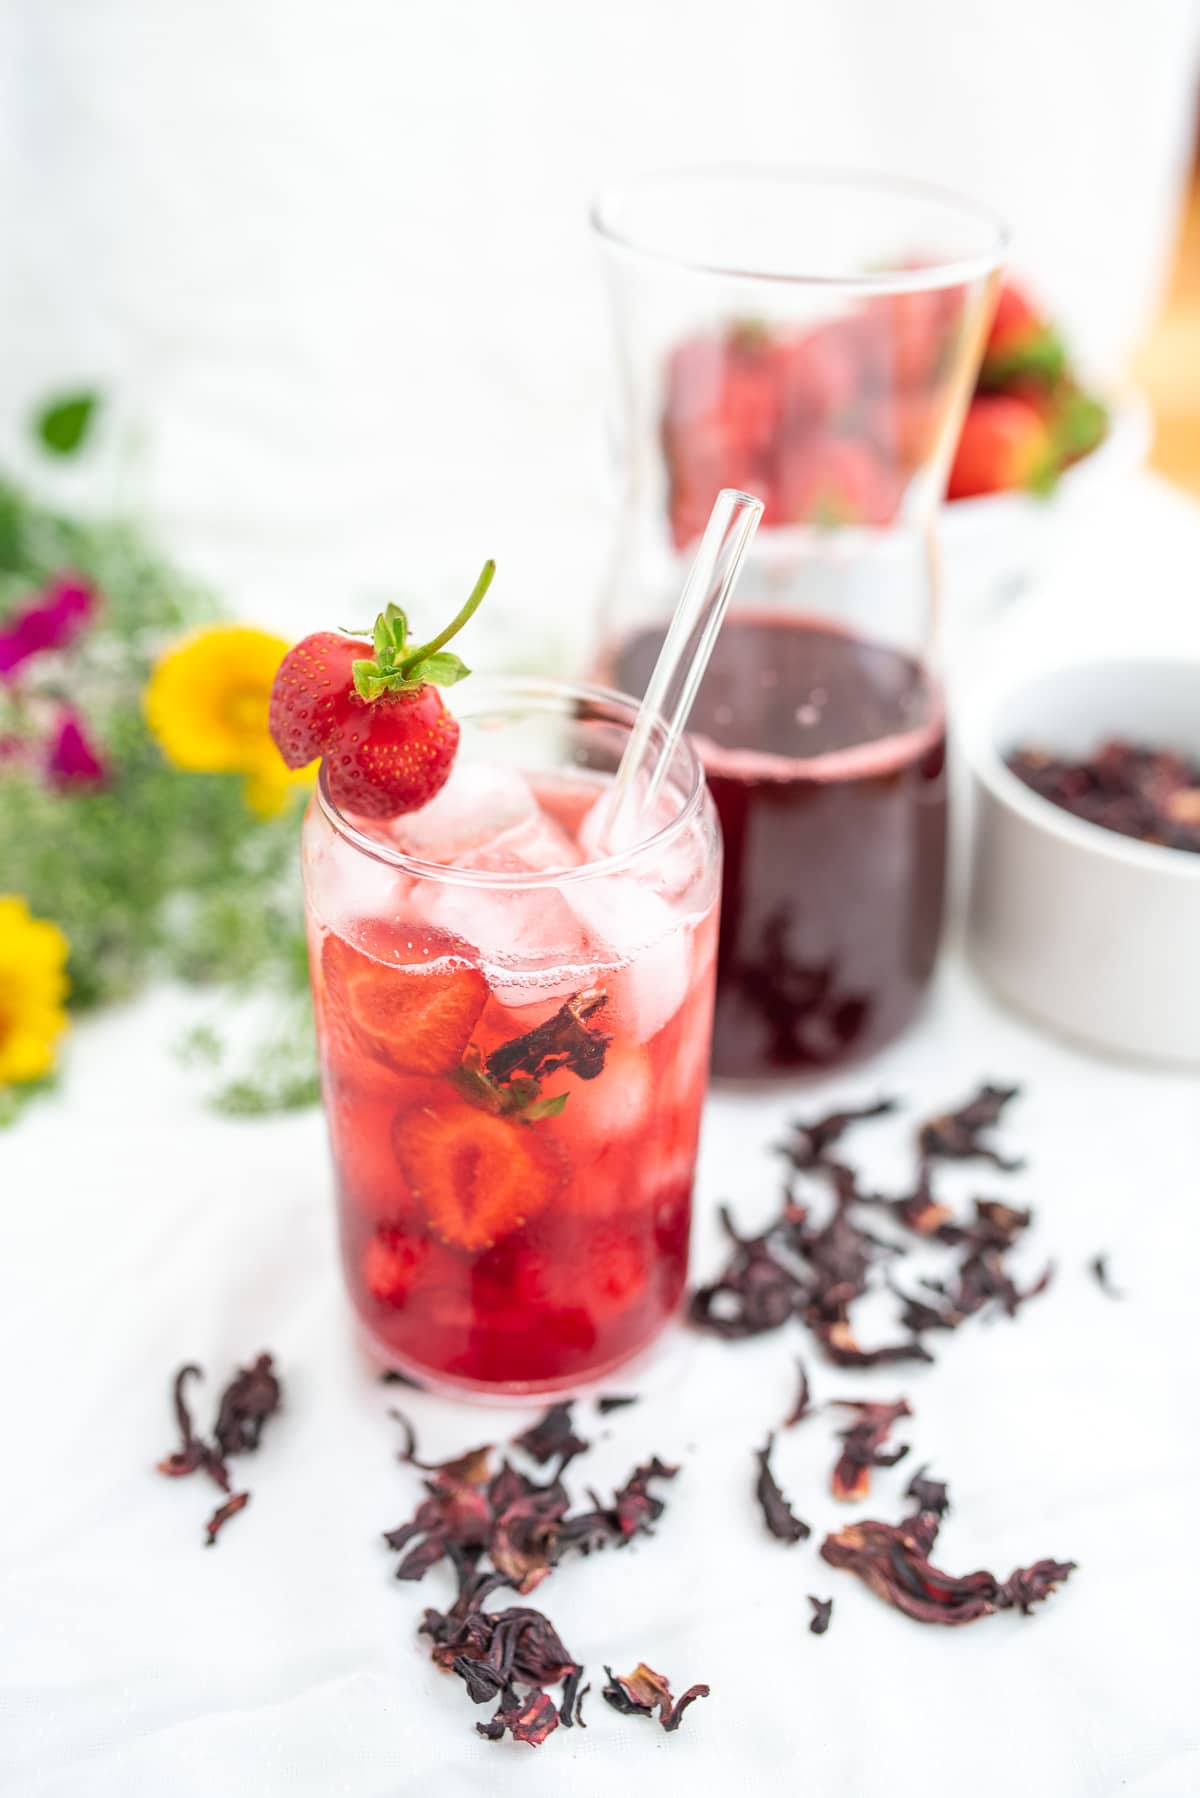 szklanka z zimnym napojem z hibiskusa i truskawek